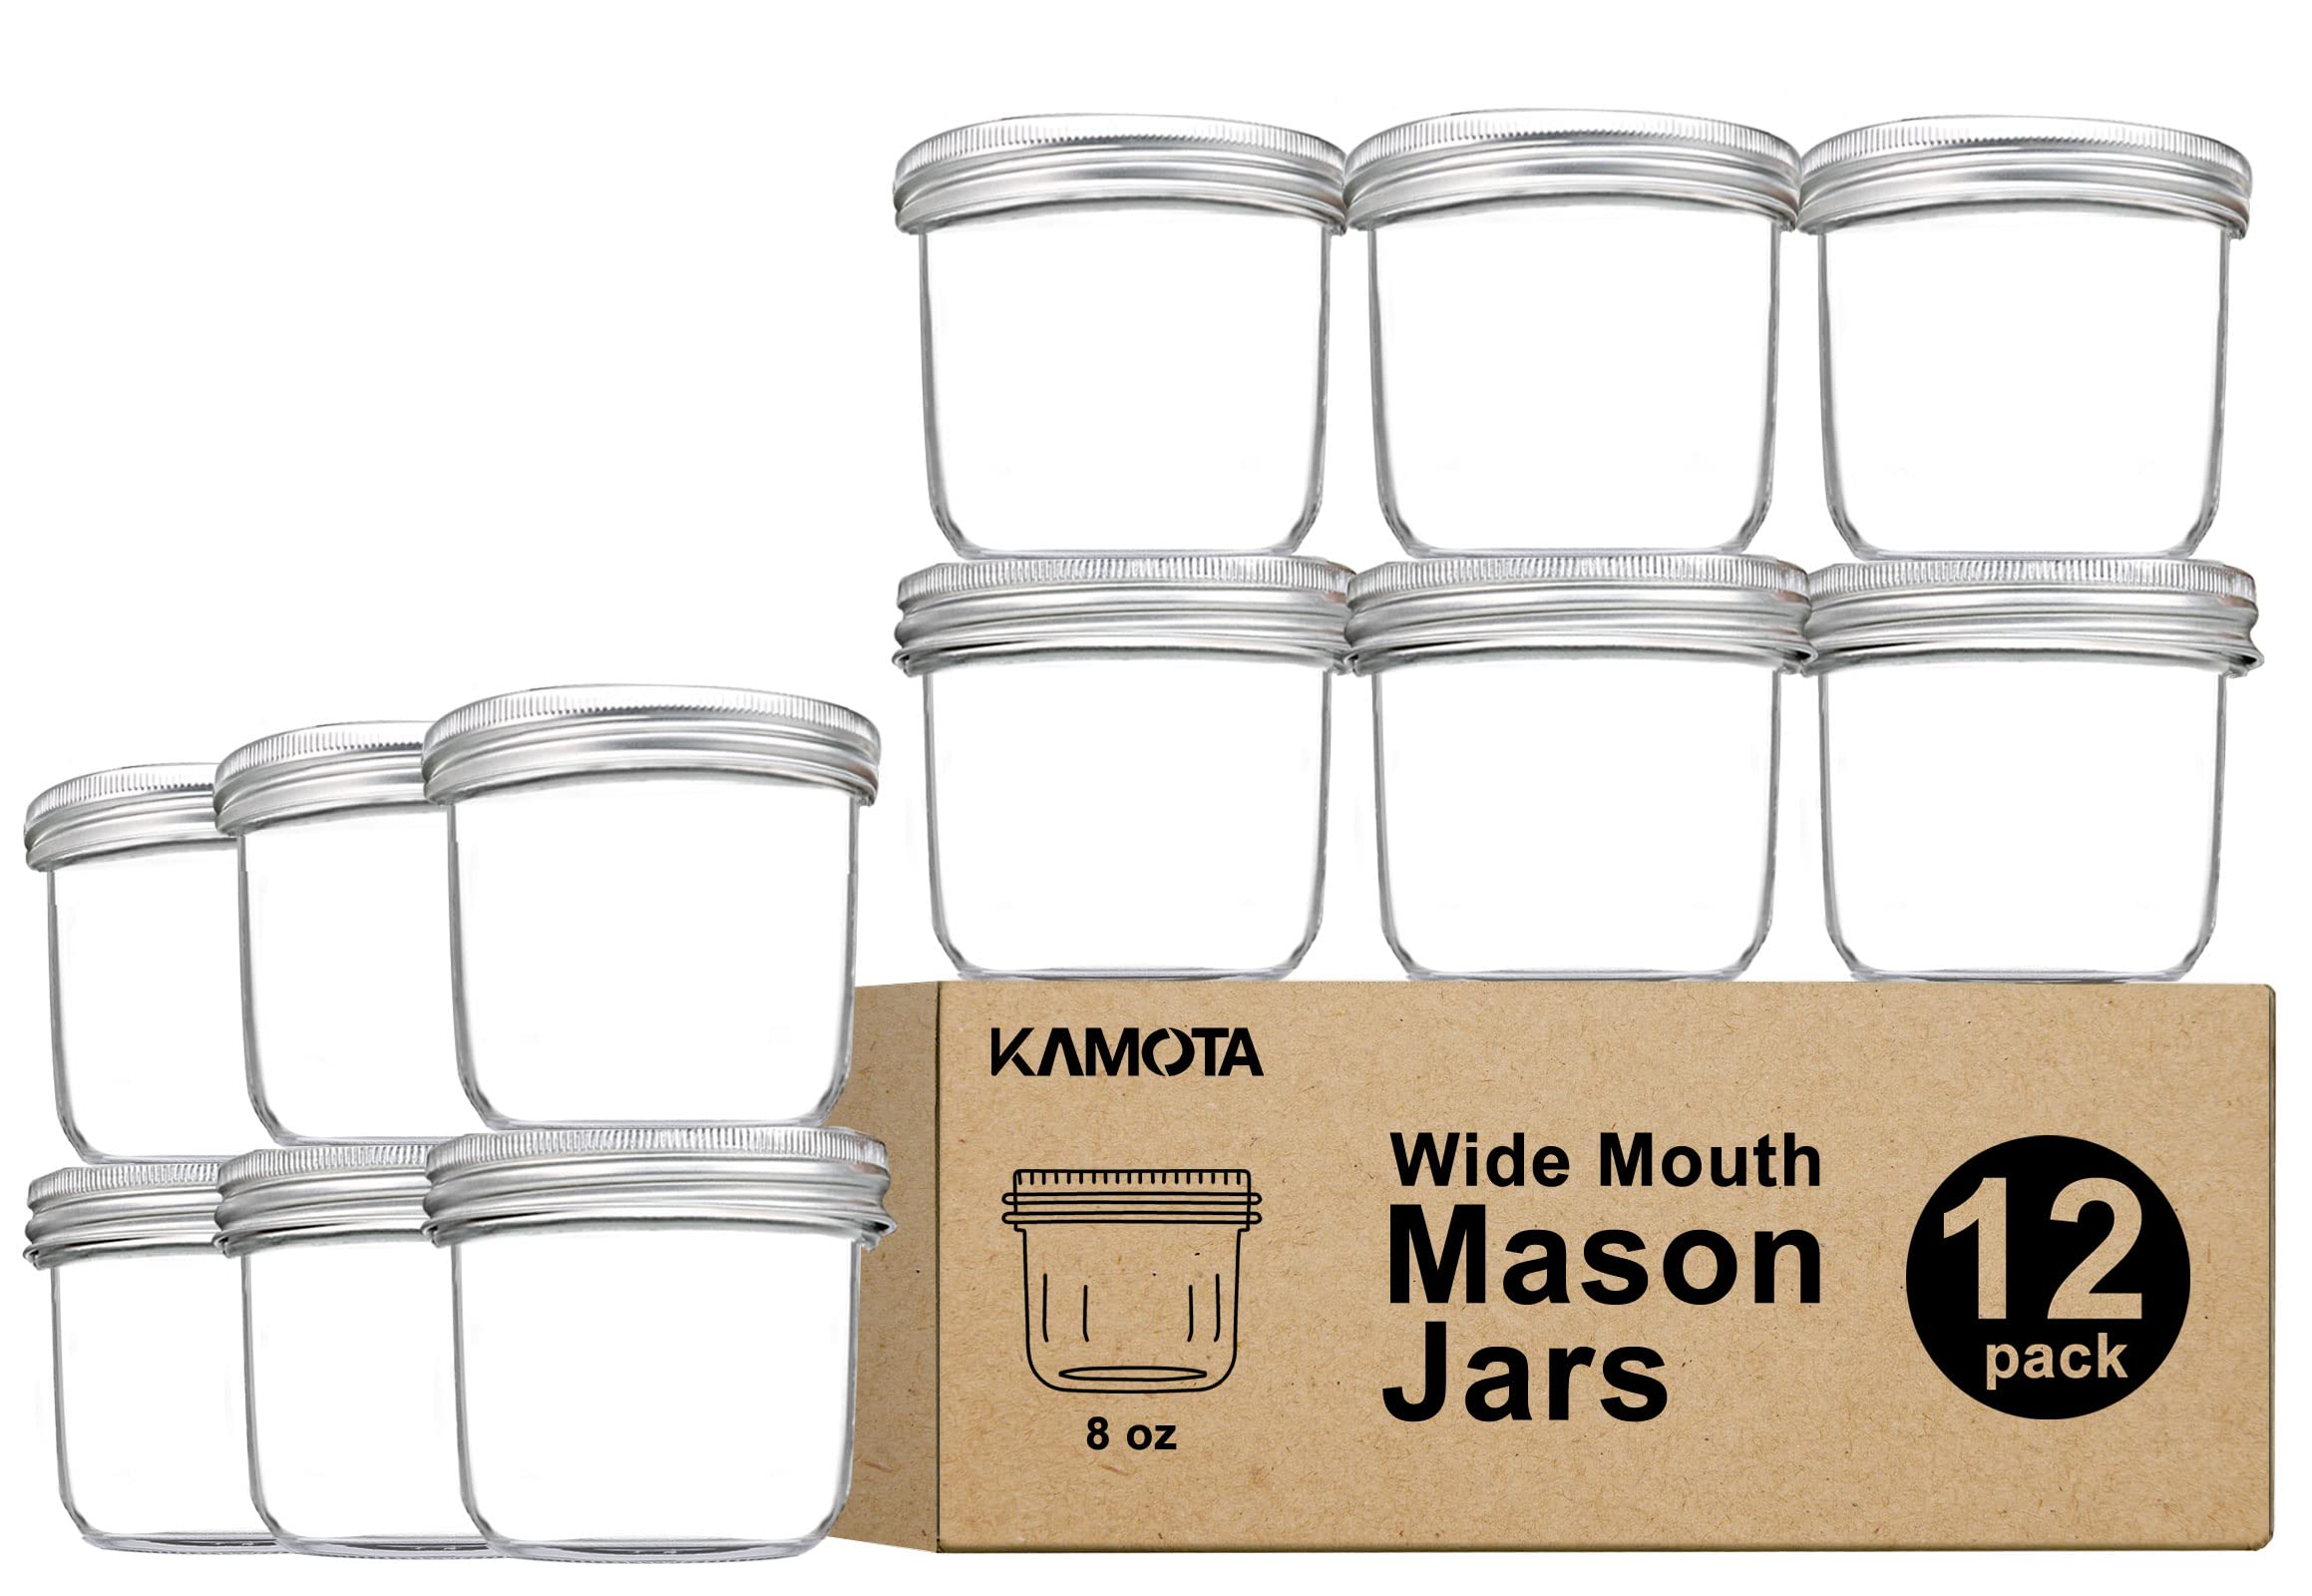 Wide Mouth Mason Jars 8 oz, KAMOTA 8oz Mason Jars Canning Jars Jelly Jars With Wide Mouth Lids and Bands, Ideal for Jam, Honey, Wedding Favors, Sho...